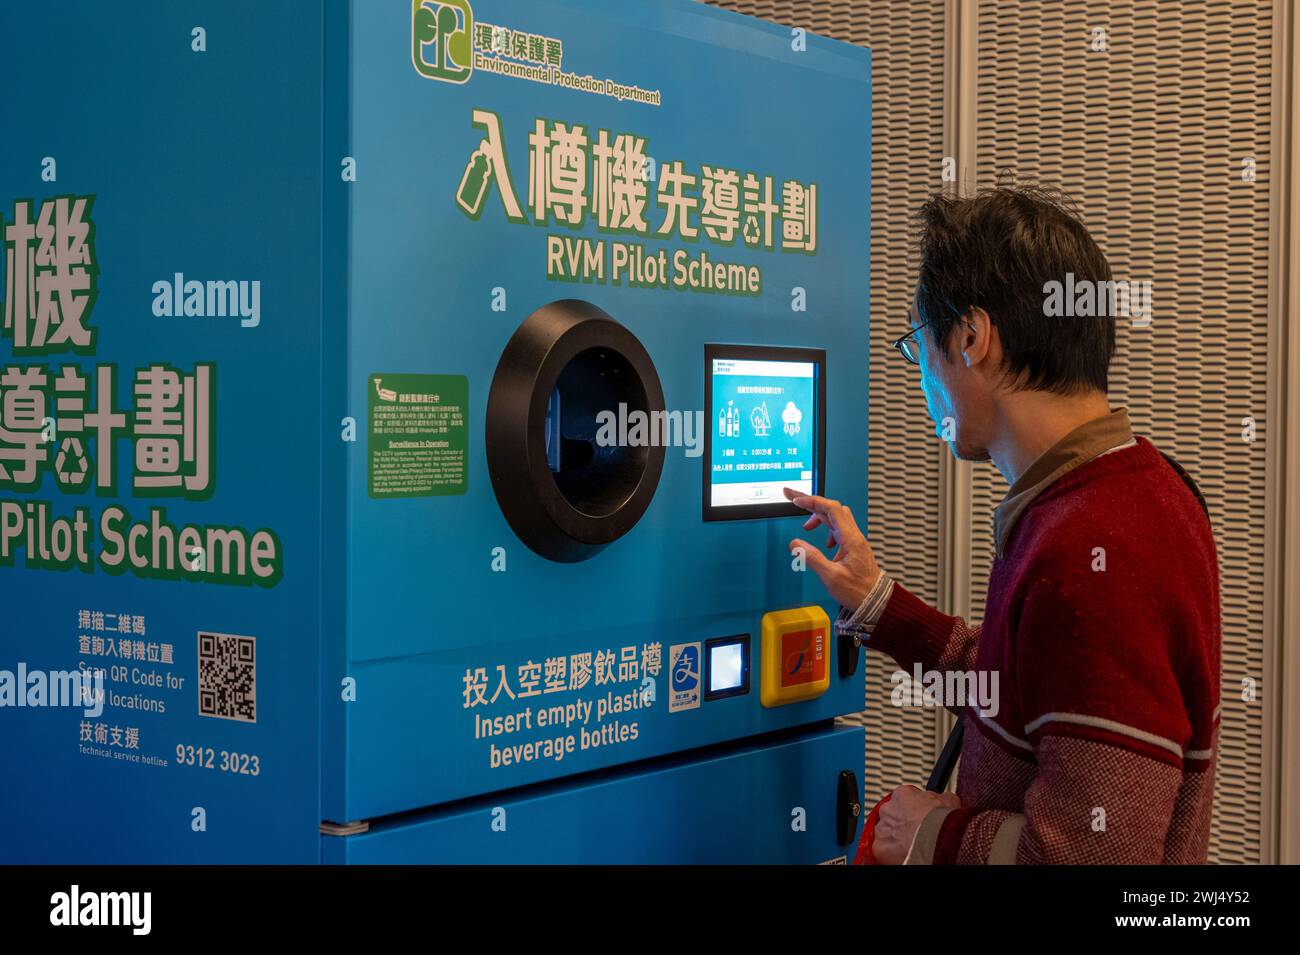 New reverse vending machines (RVM) installed in Hong Kong for recycling plastic bottles, Hong Kong, China. Stock Photo